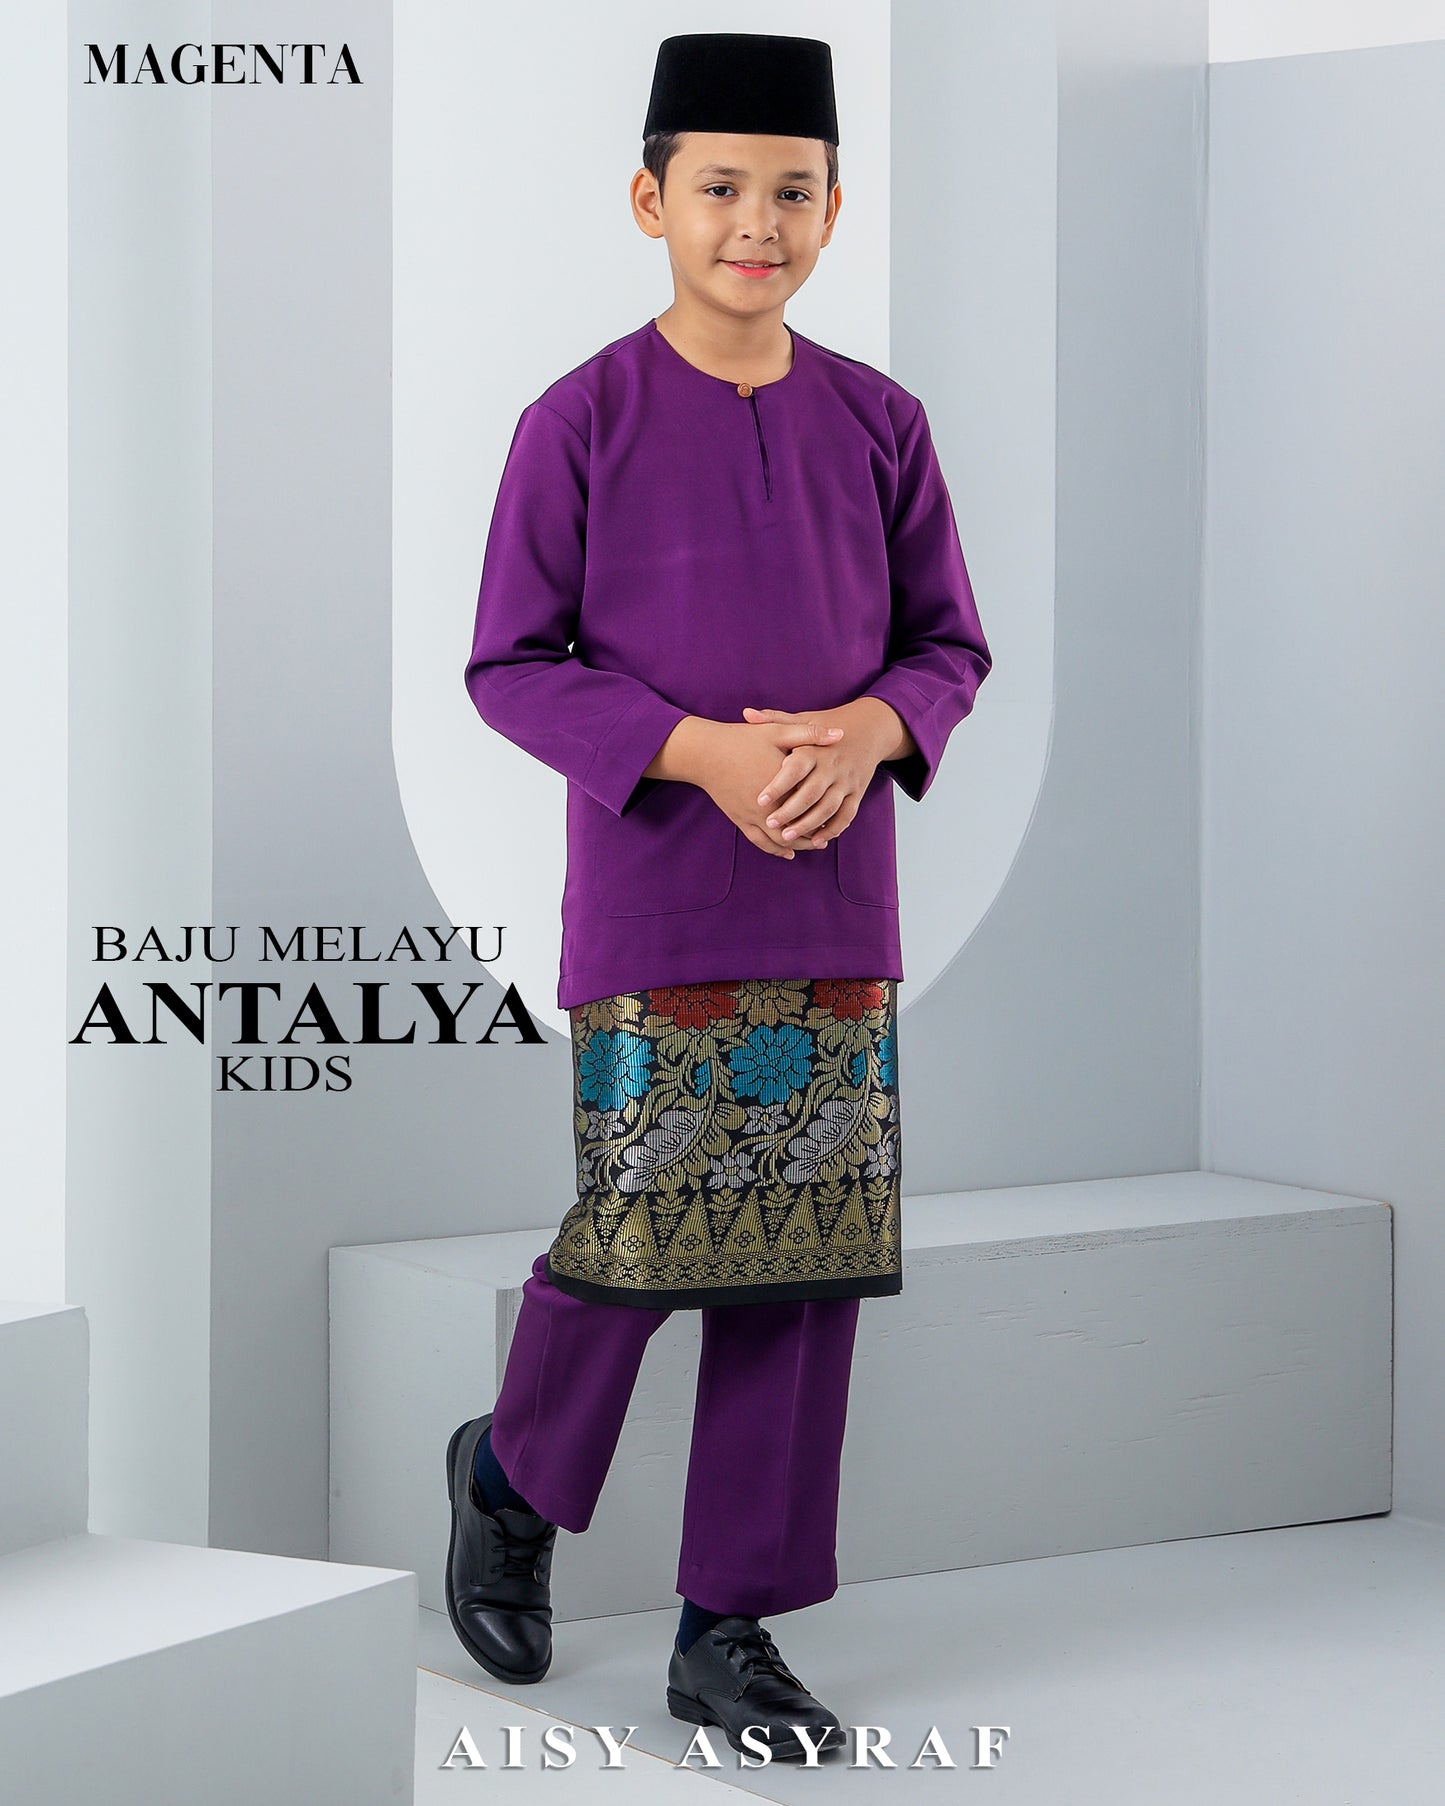 Baju Melayu Antalya Kids - Magenta